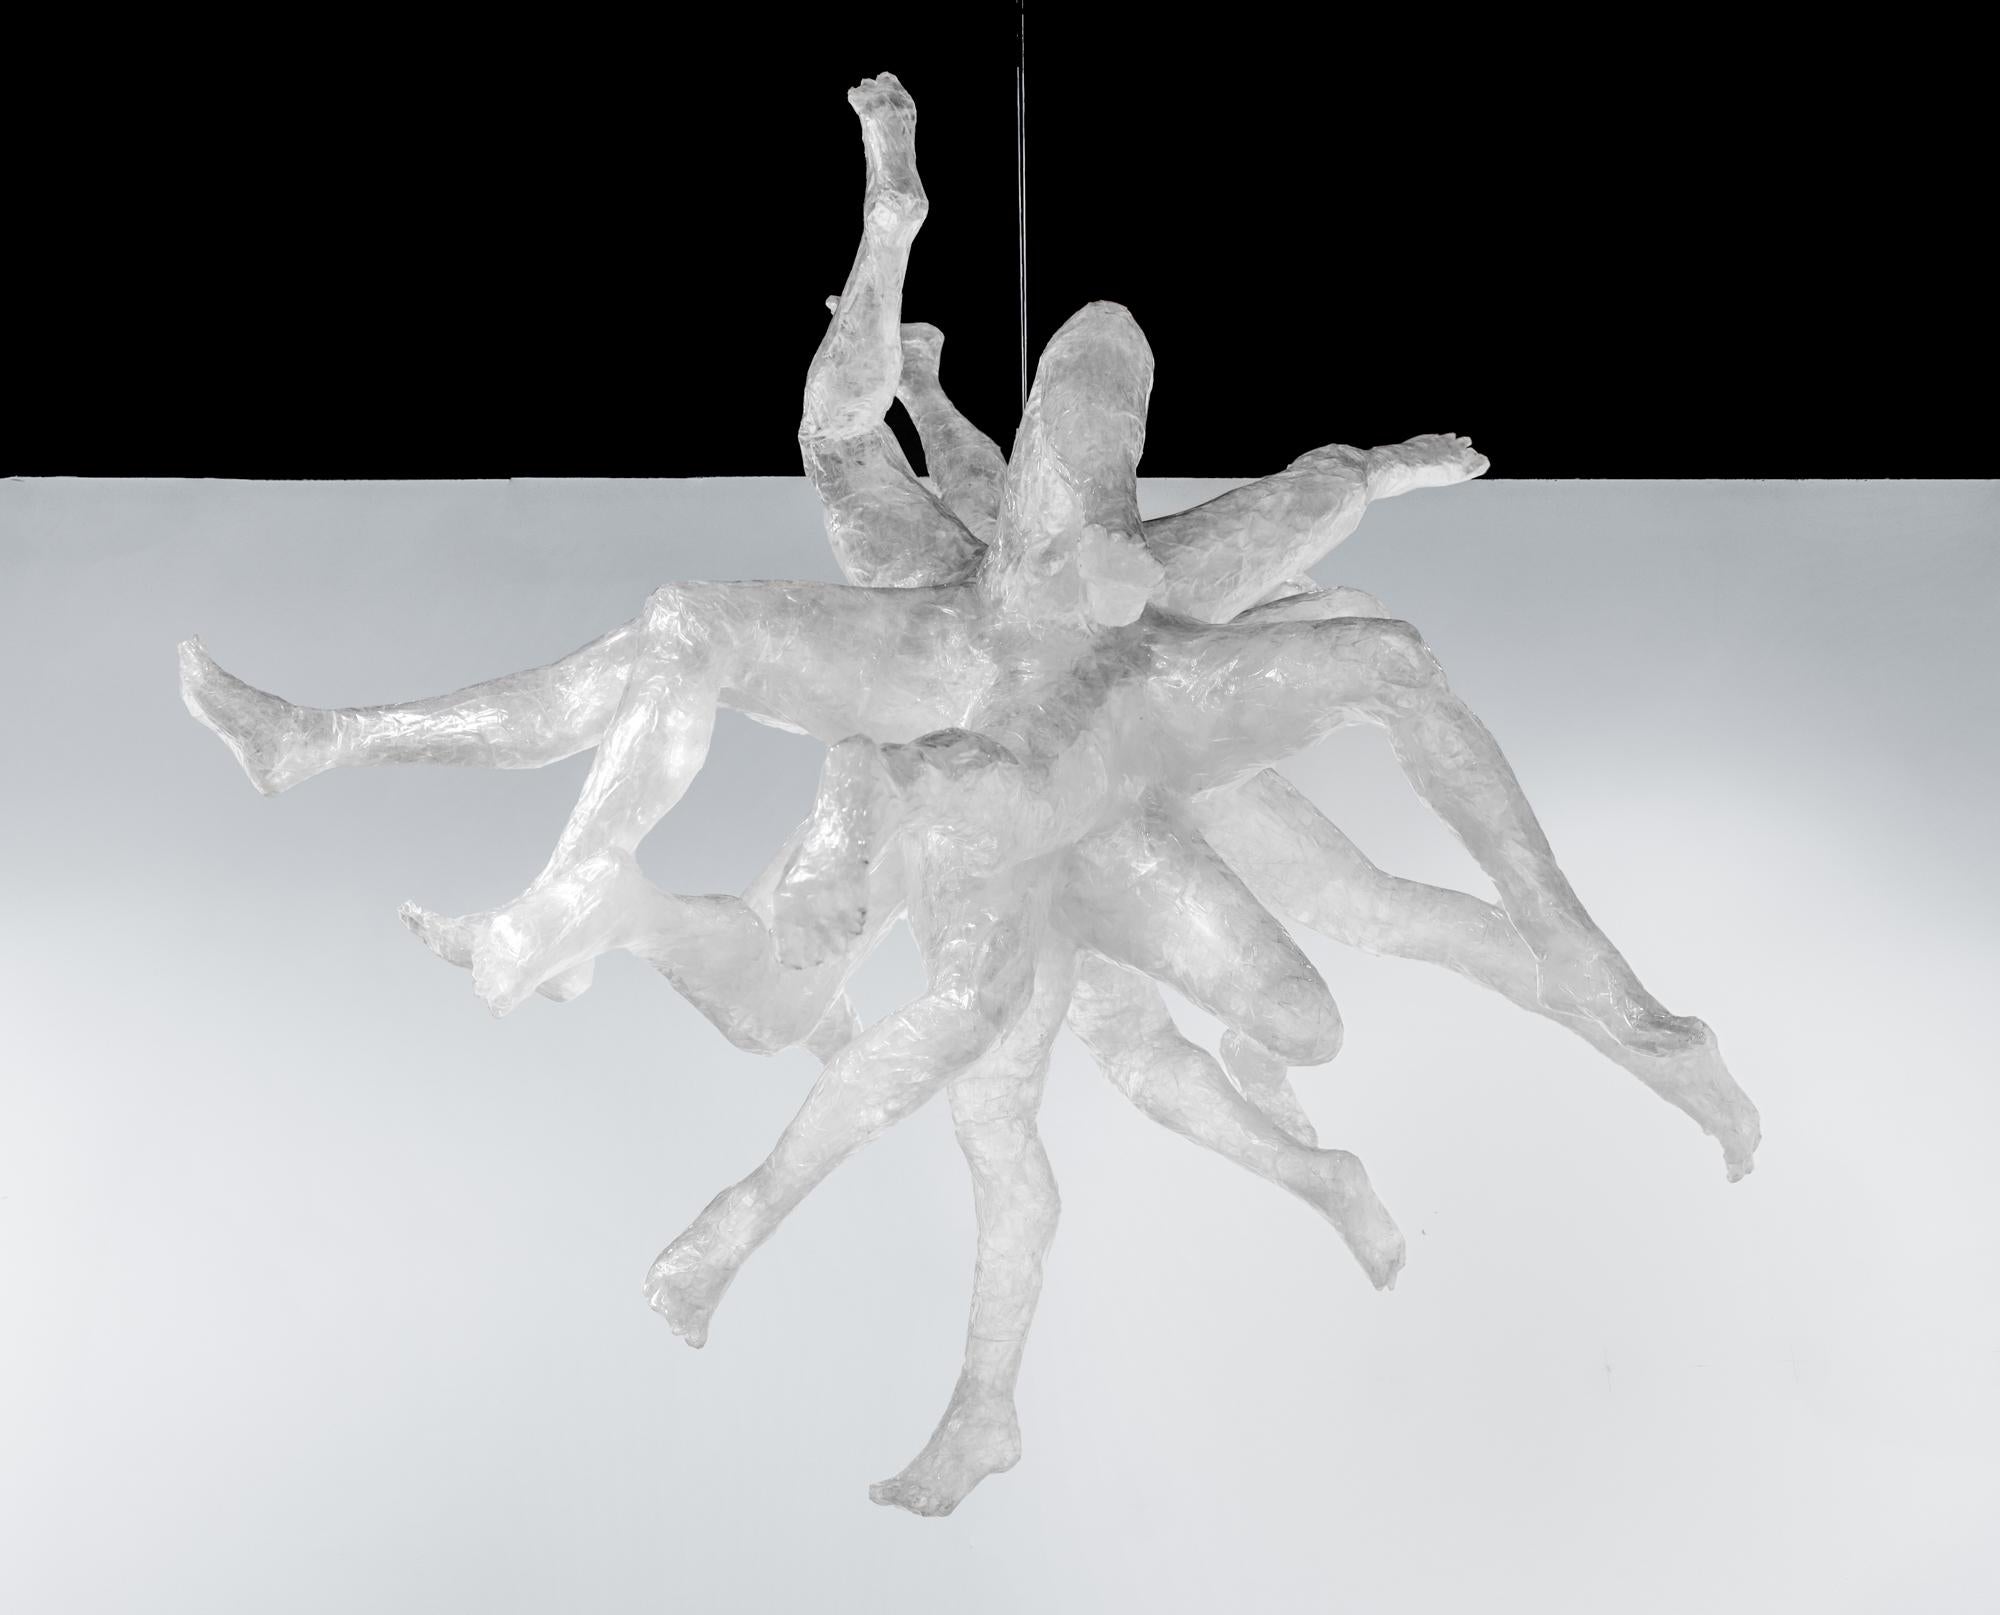 "Running Towards Fear" Hanging figurative sculpture - Mixed Media Art by Jodi Rice